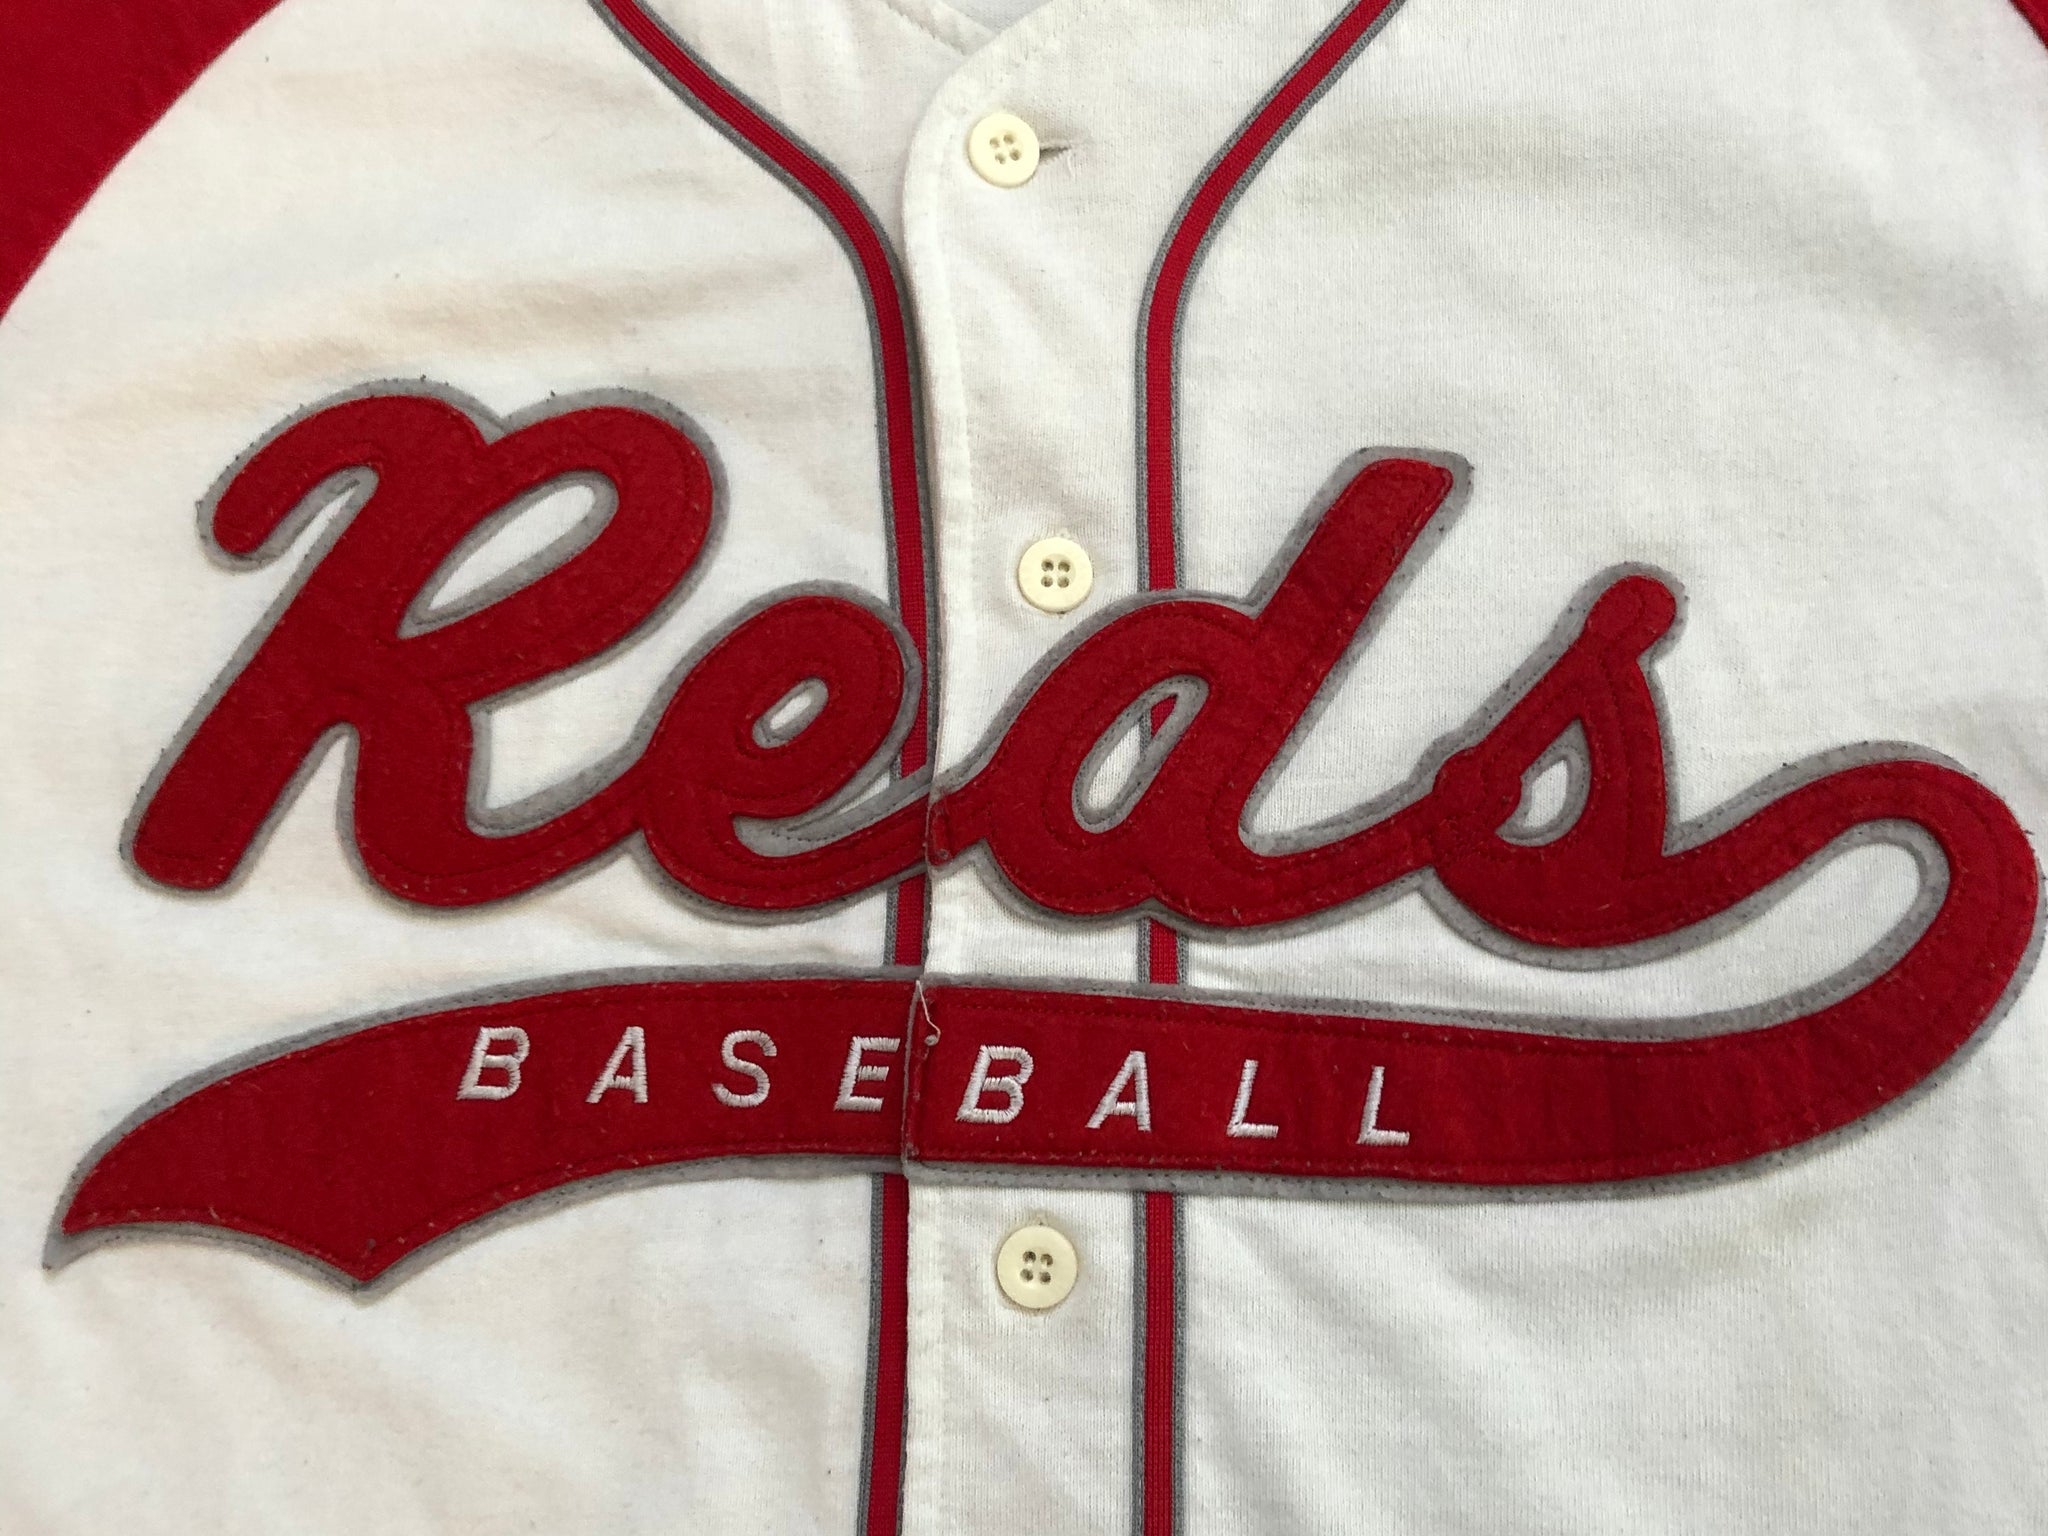 Cincinnati Reds wear 1936 throwback uniforms